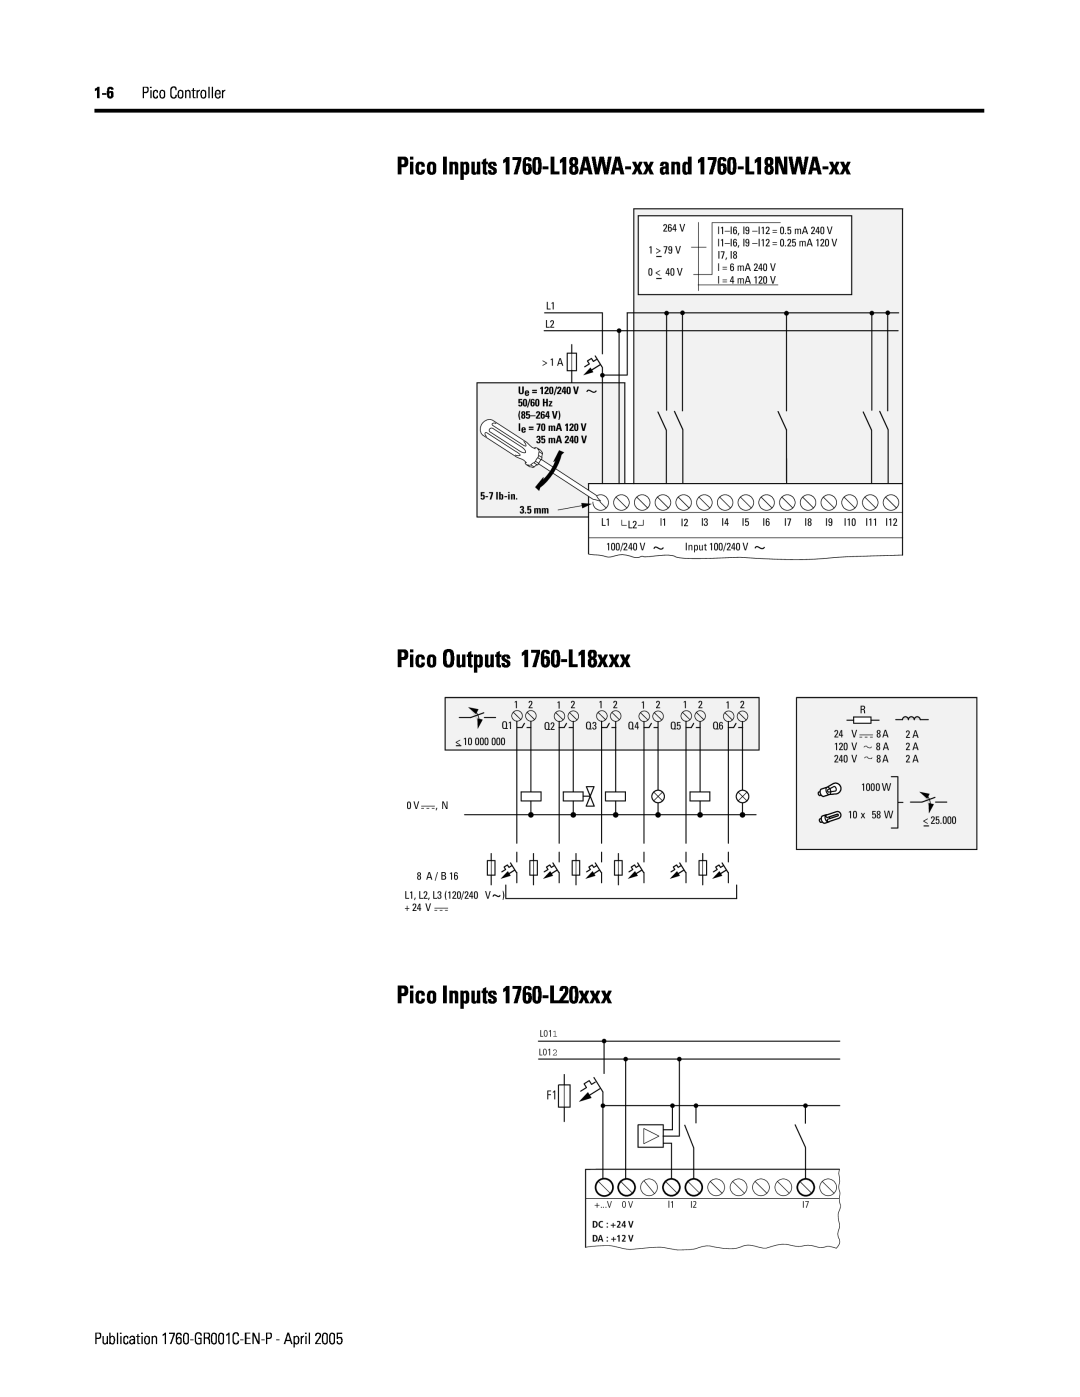 AB Soft manual Pico Outputs 1760-L18xxx, Pico Inputs 1760-L20xxx, Pico Inputs 1760-L18AWA-xx and 1760-L18NWA-xx 